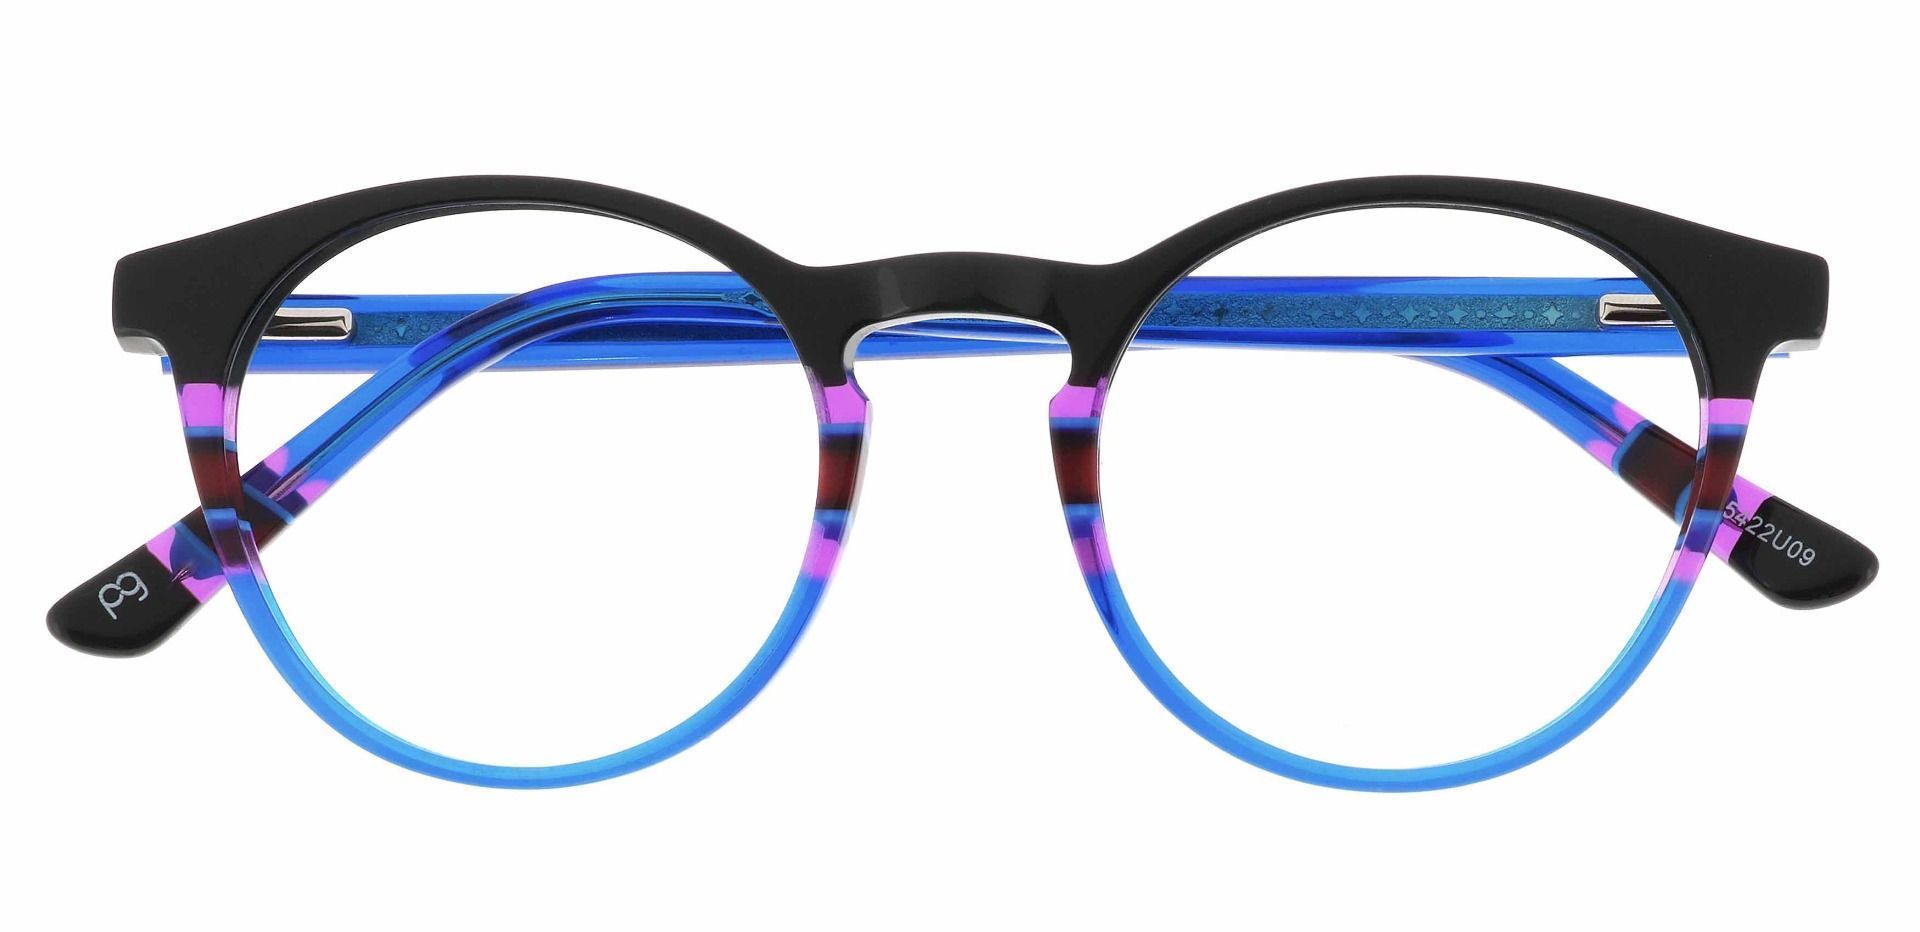 Jellie Round Non-Rx Glasses - Black/royal Blue Stripe